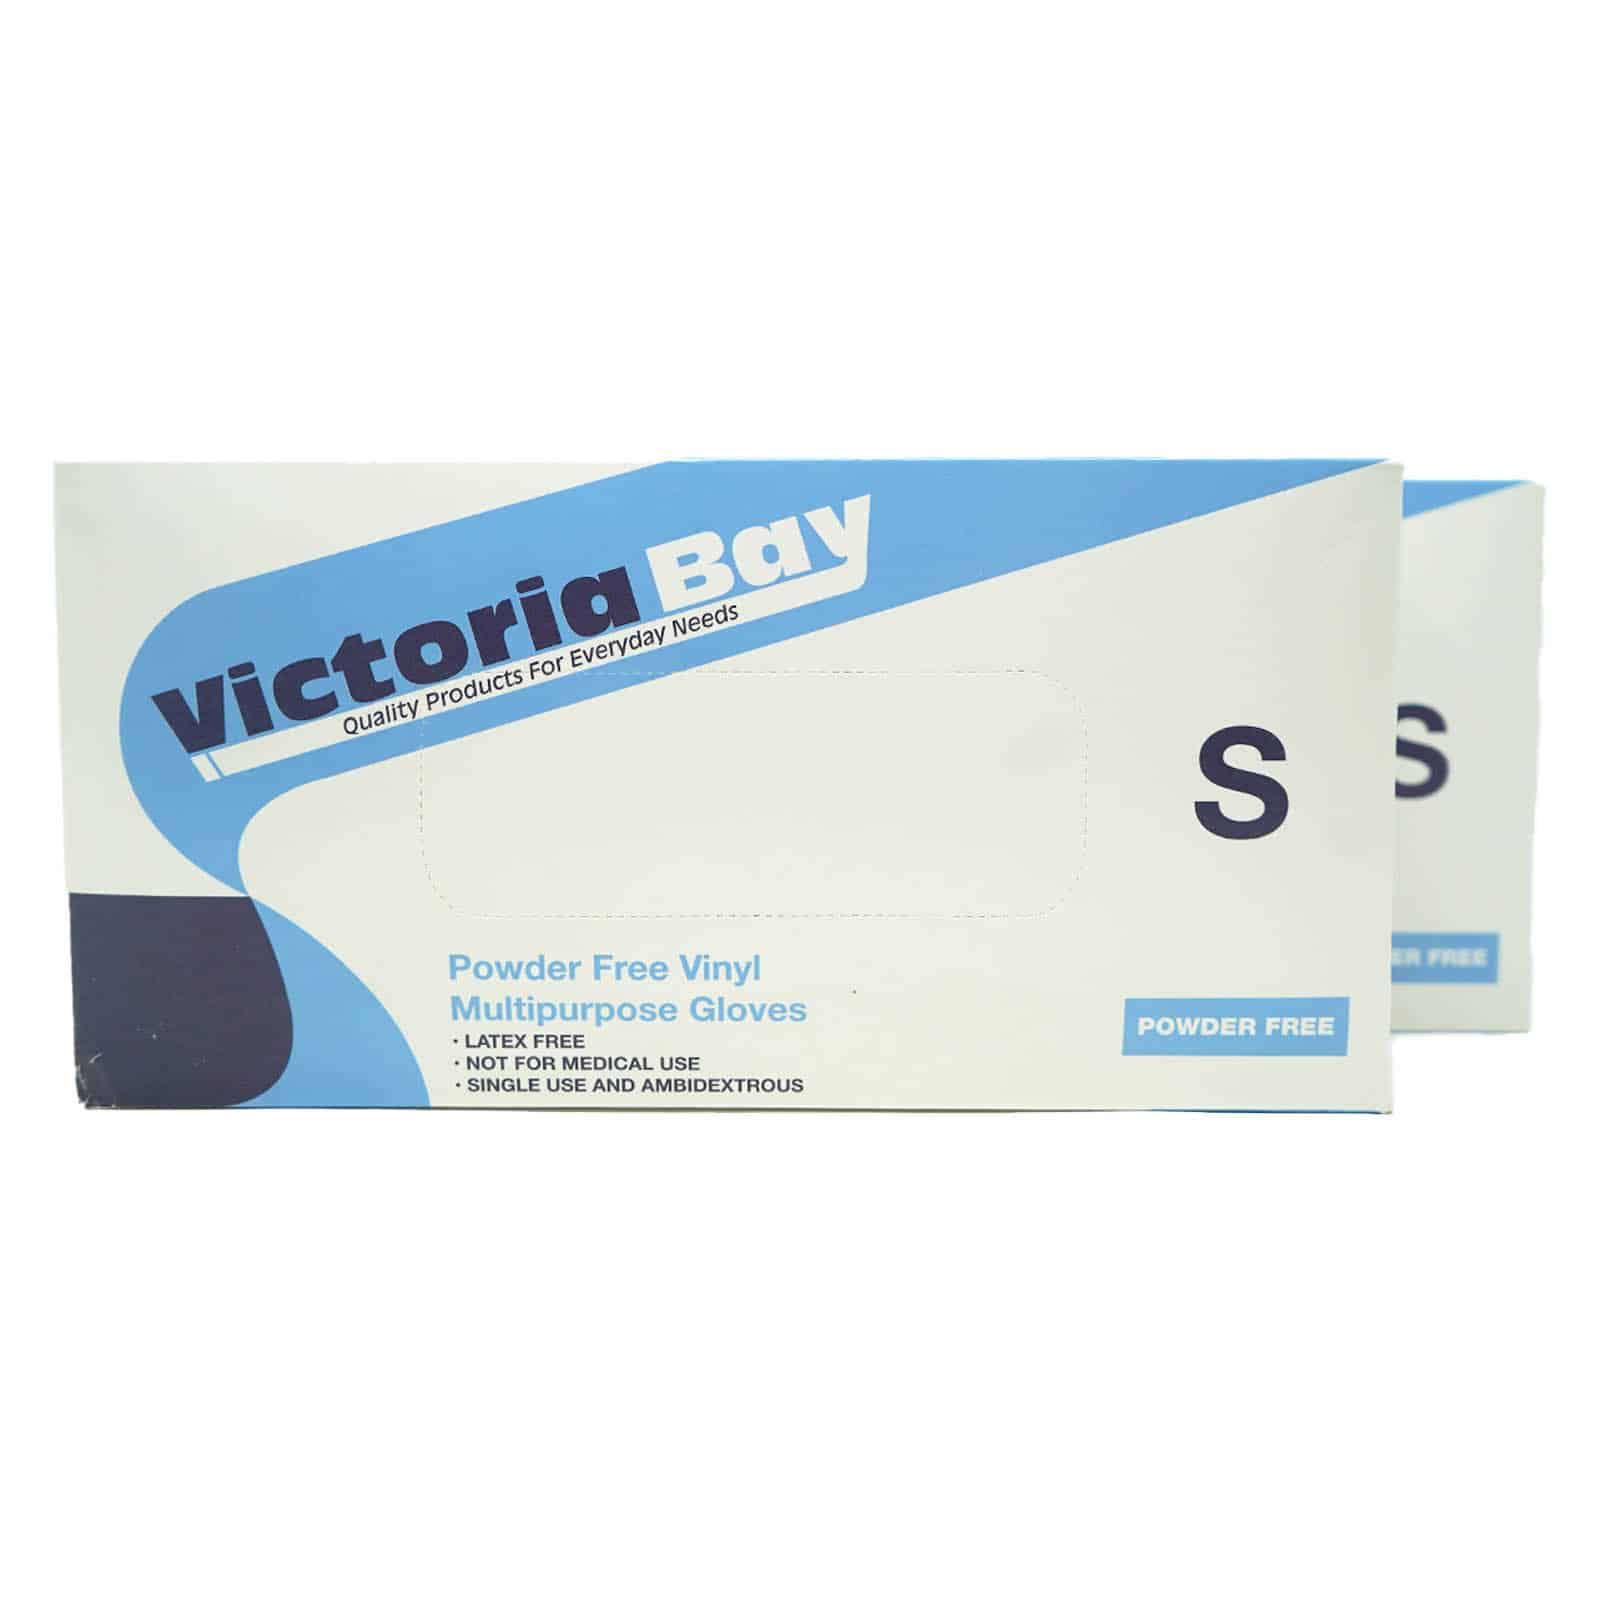 Victoria Bay Small Vinyl Gloves